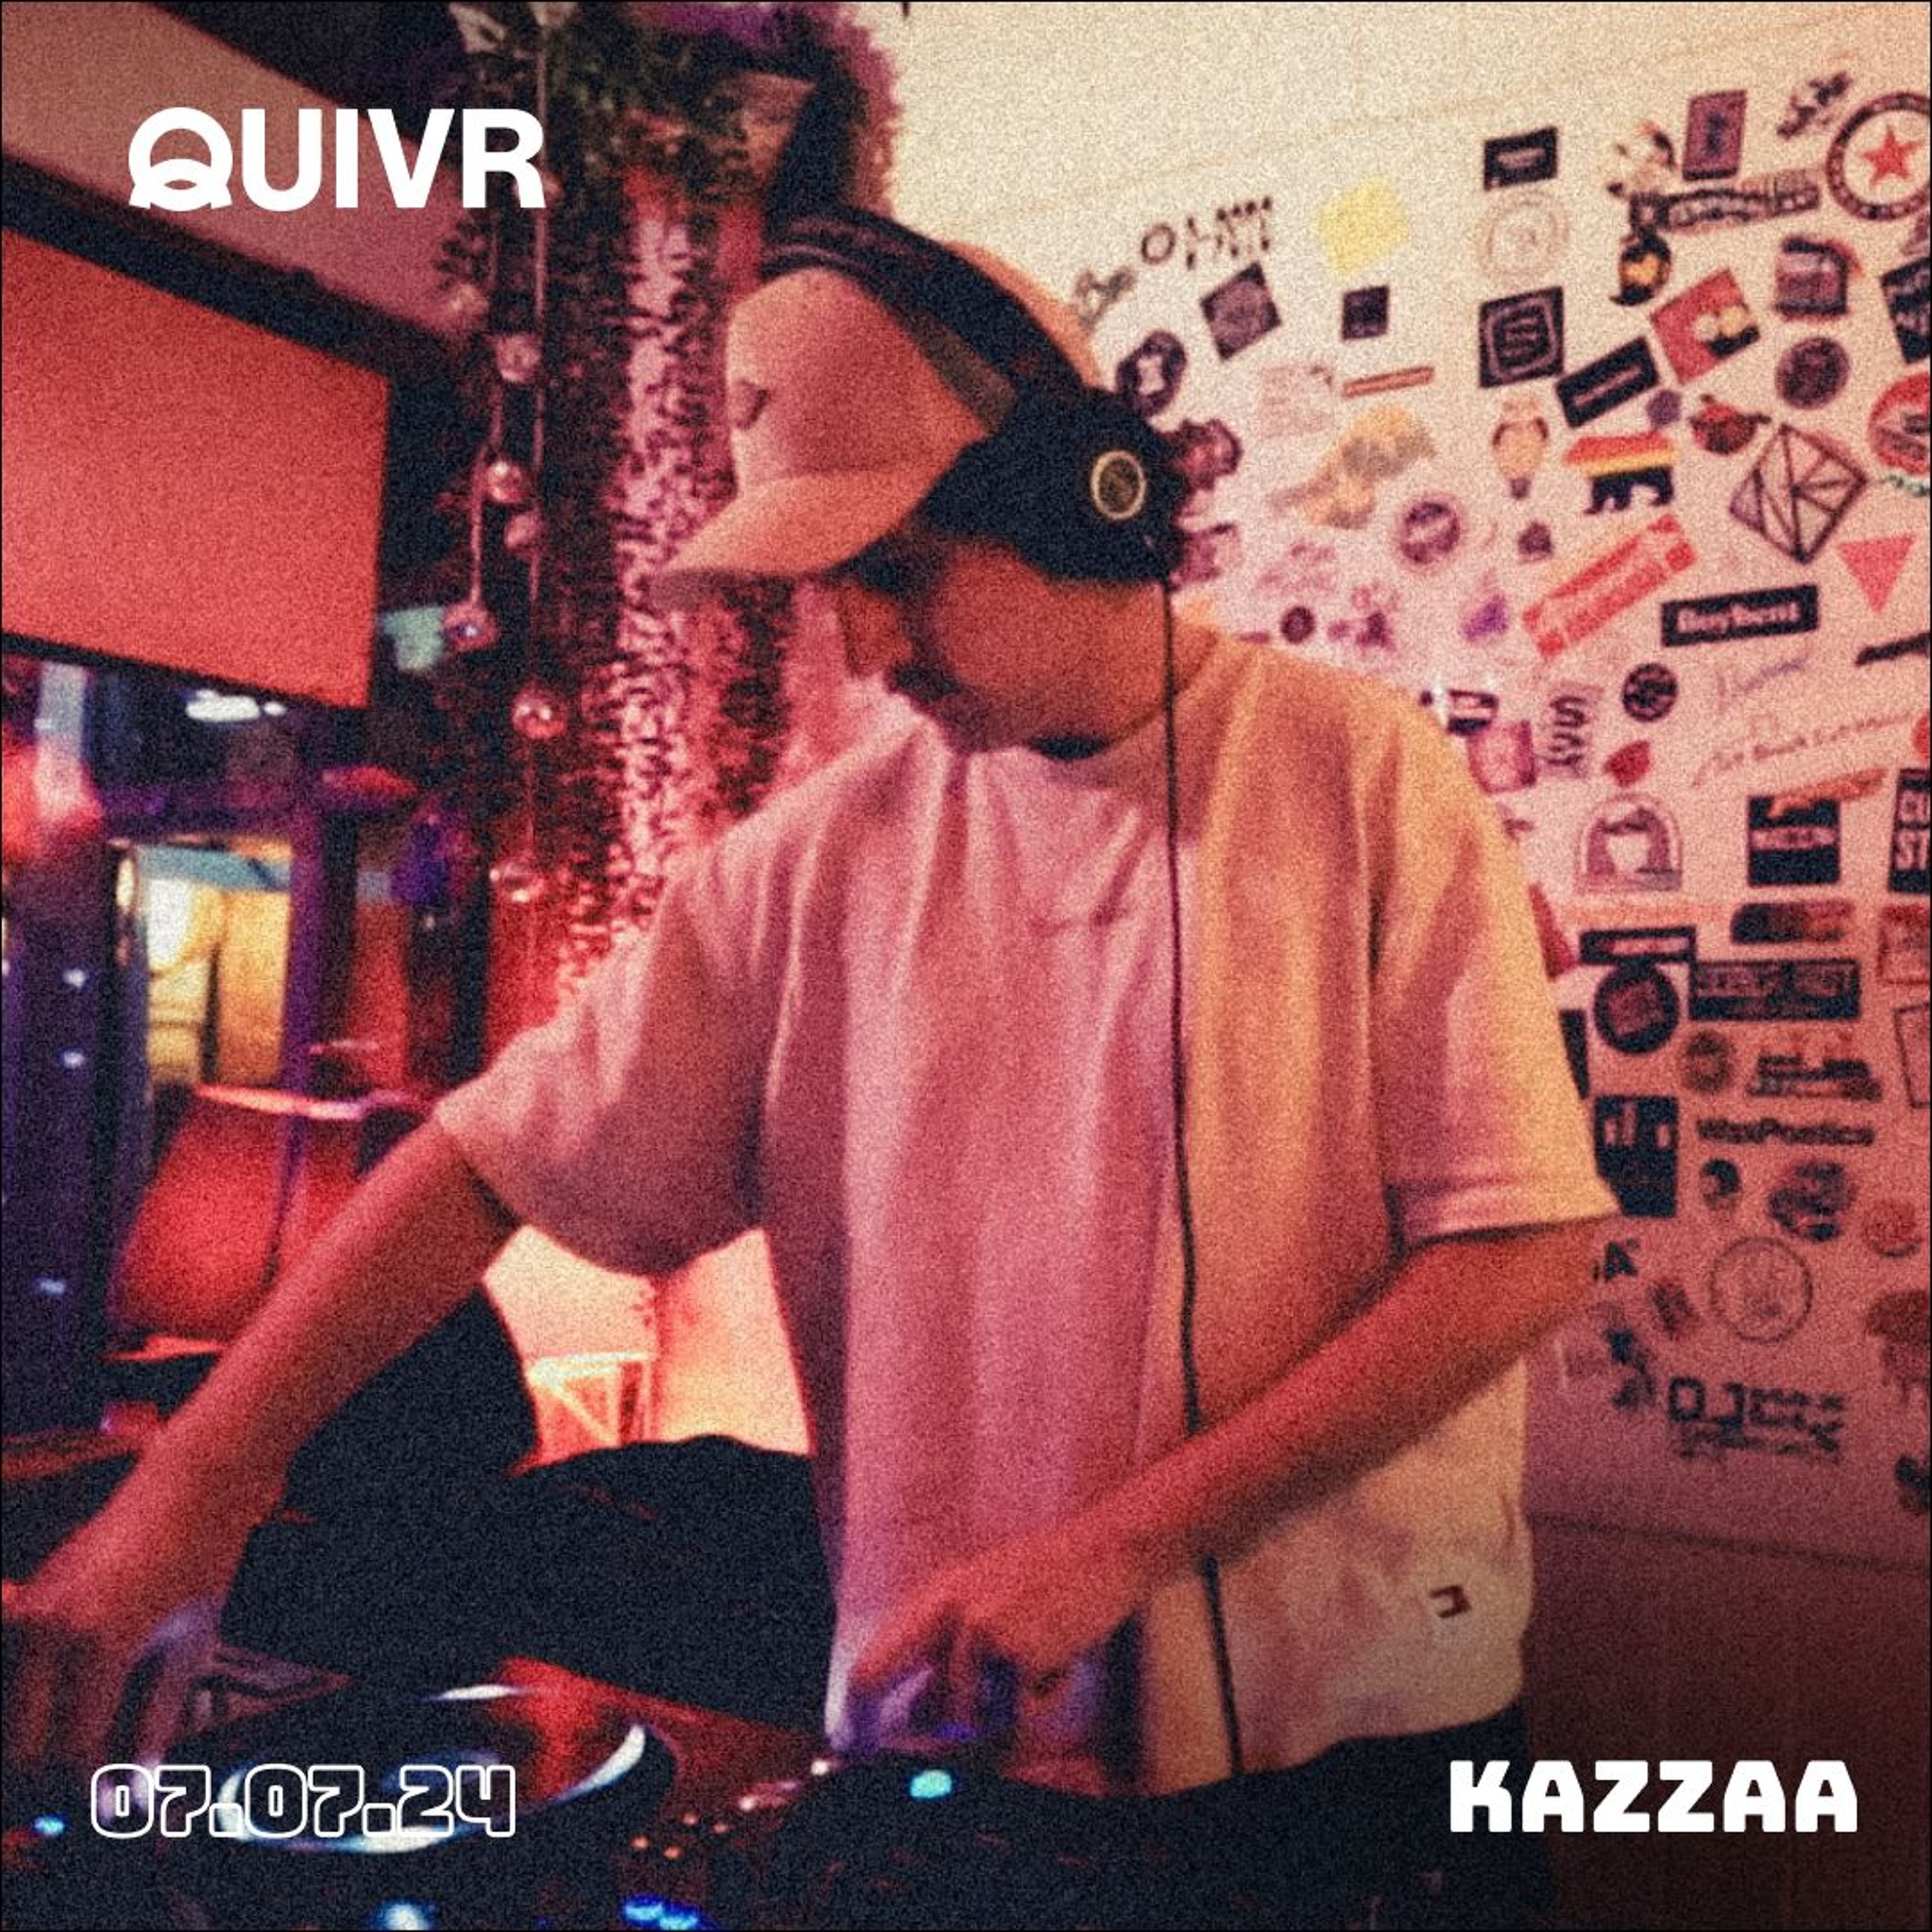 Kazzaa | QUIVR | 06-07-24